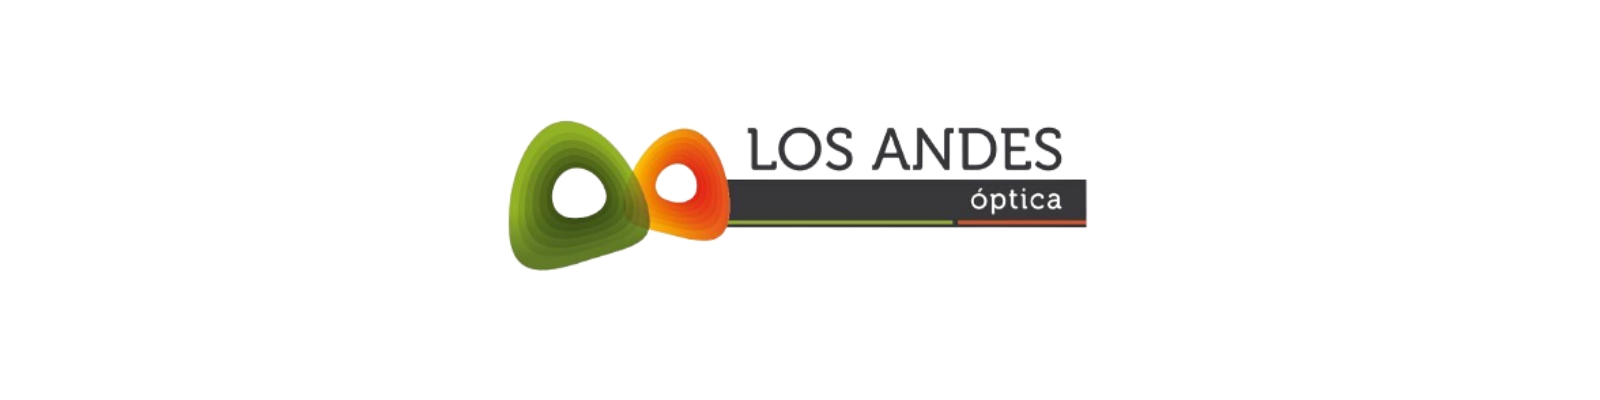 LOS ANDES OPTICA SLIDE HOME WEB